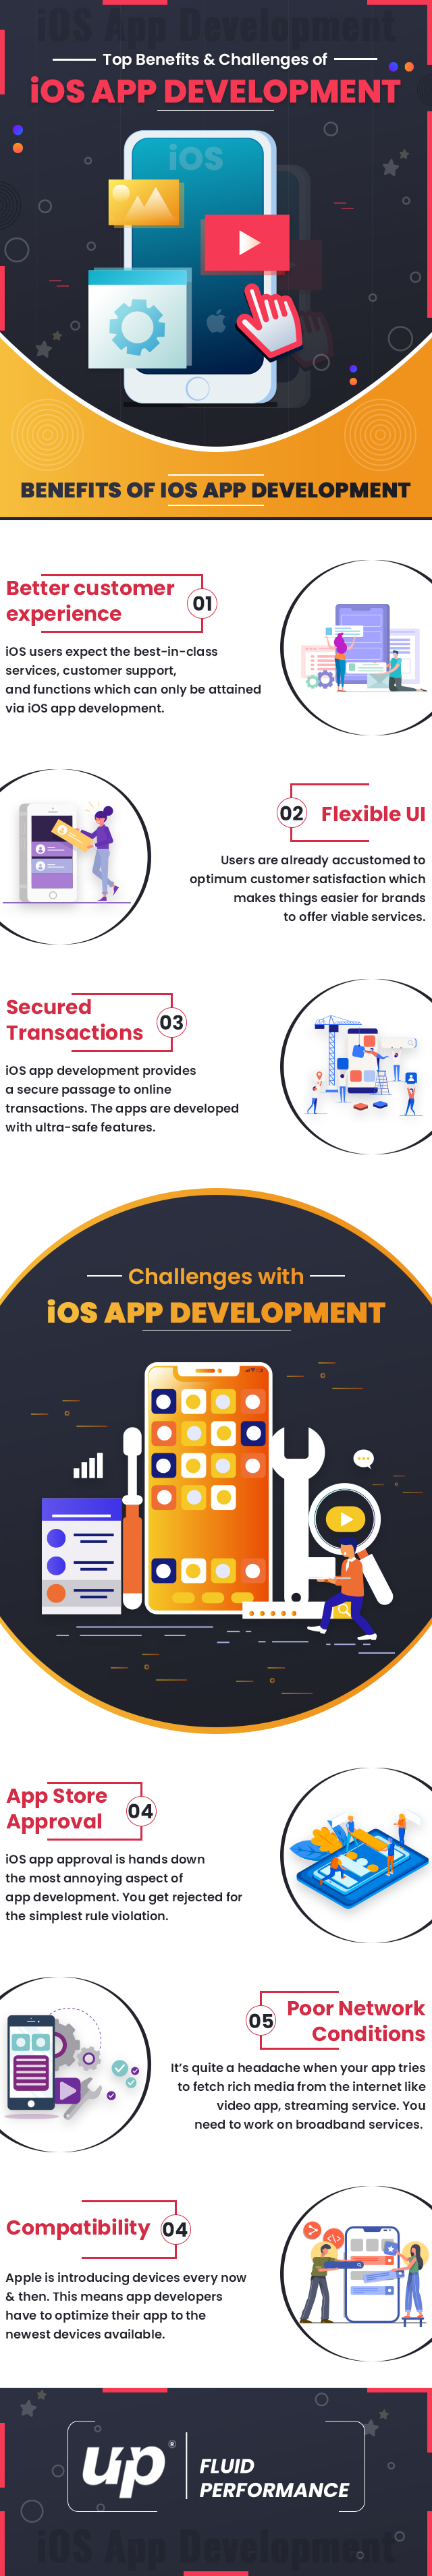 Top Benefits and Challenges of iOS App Development